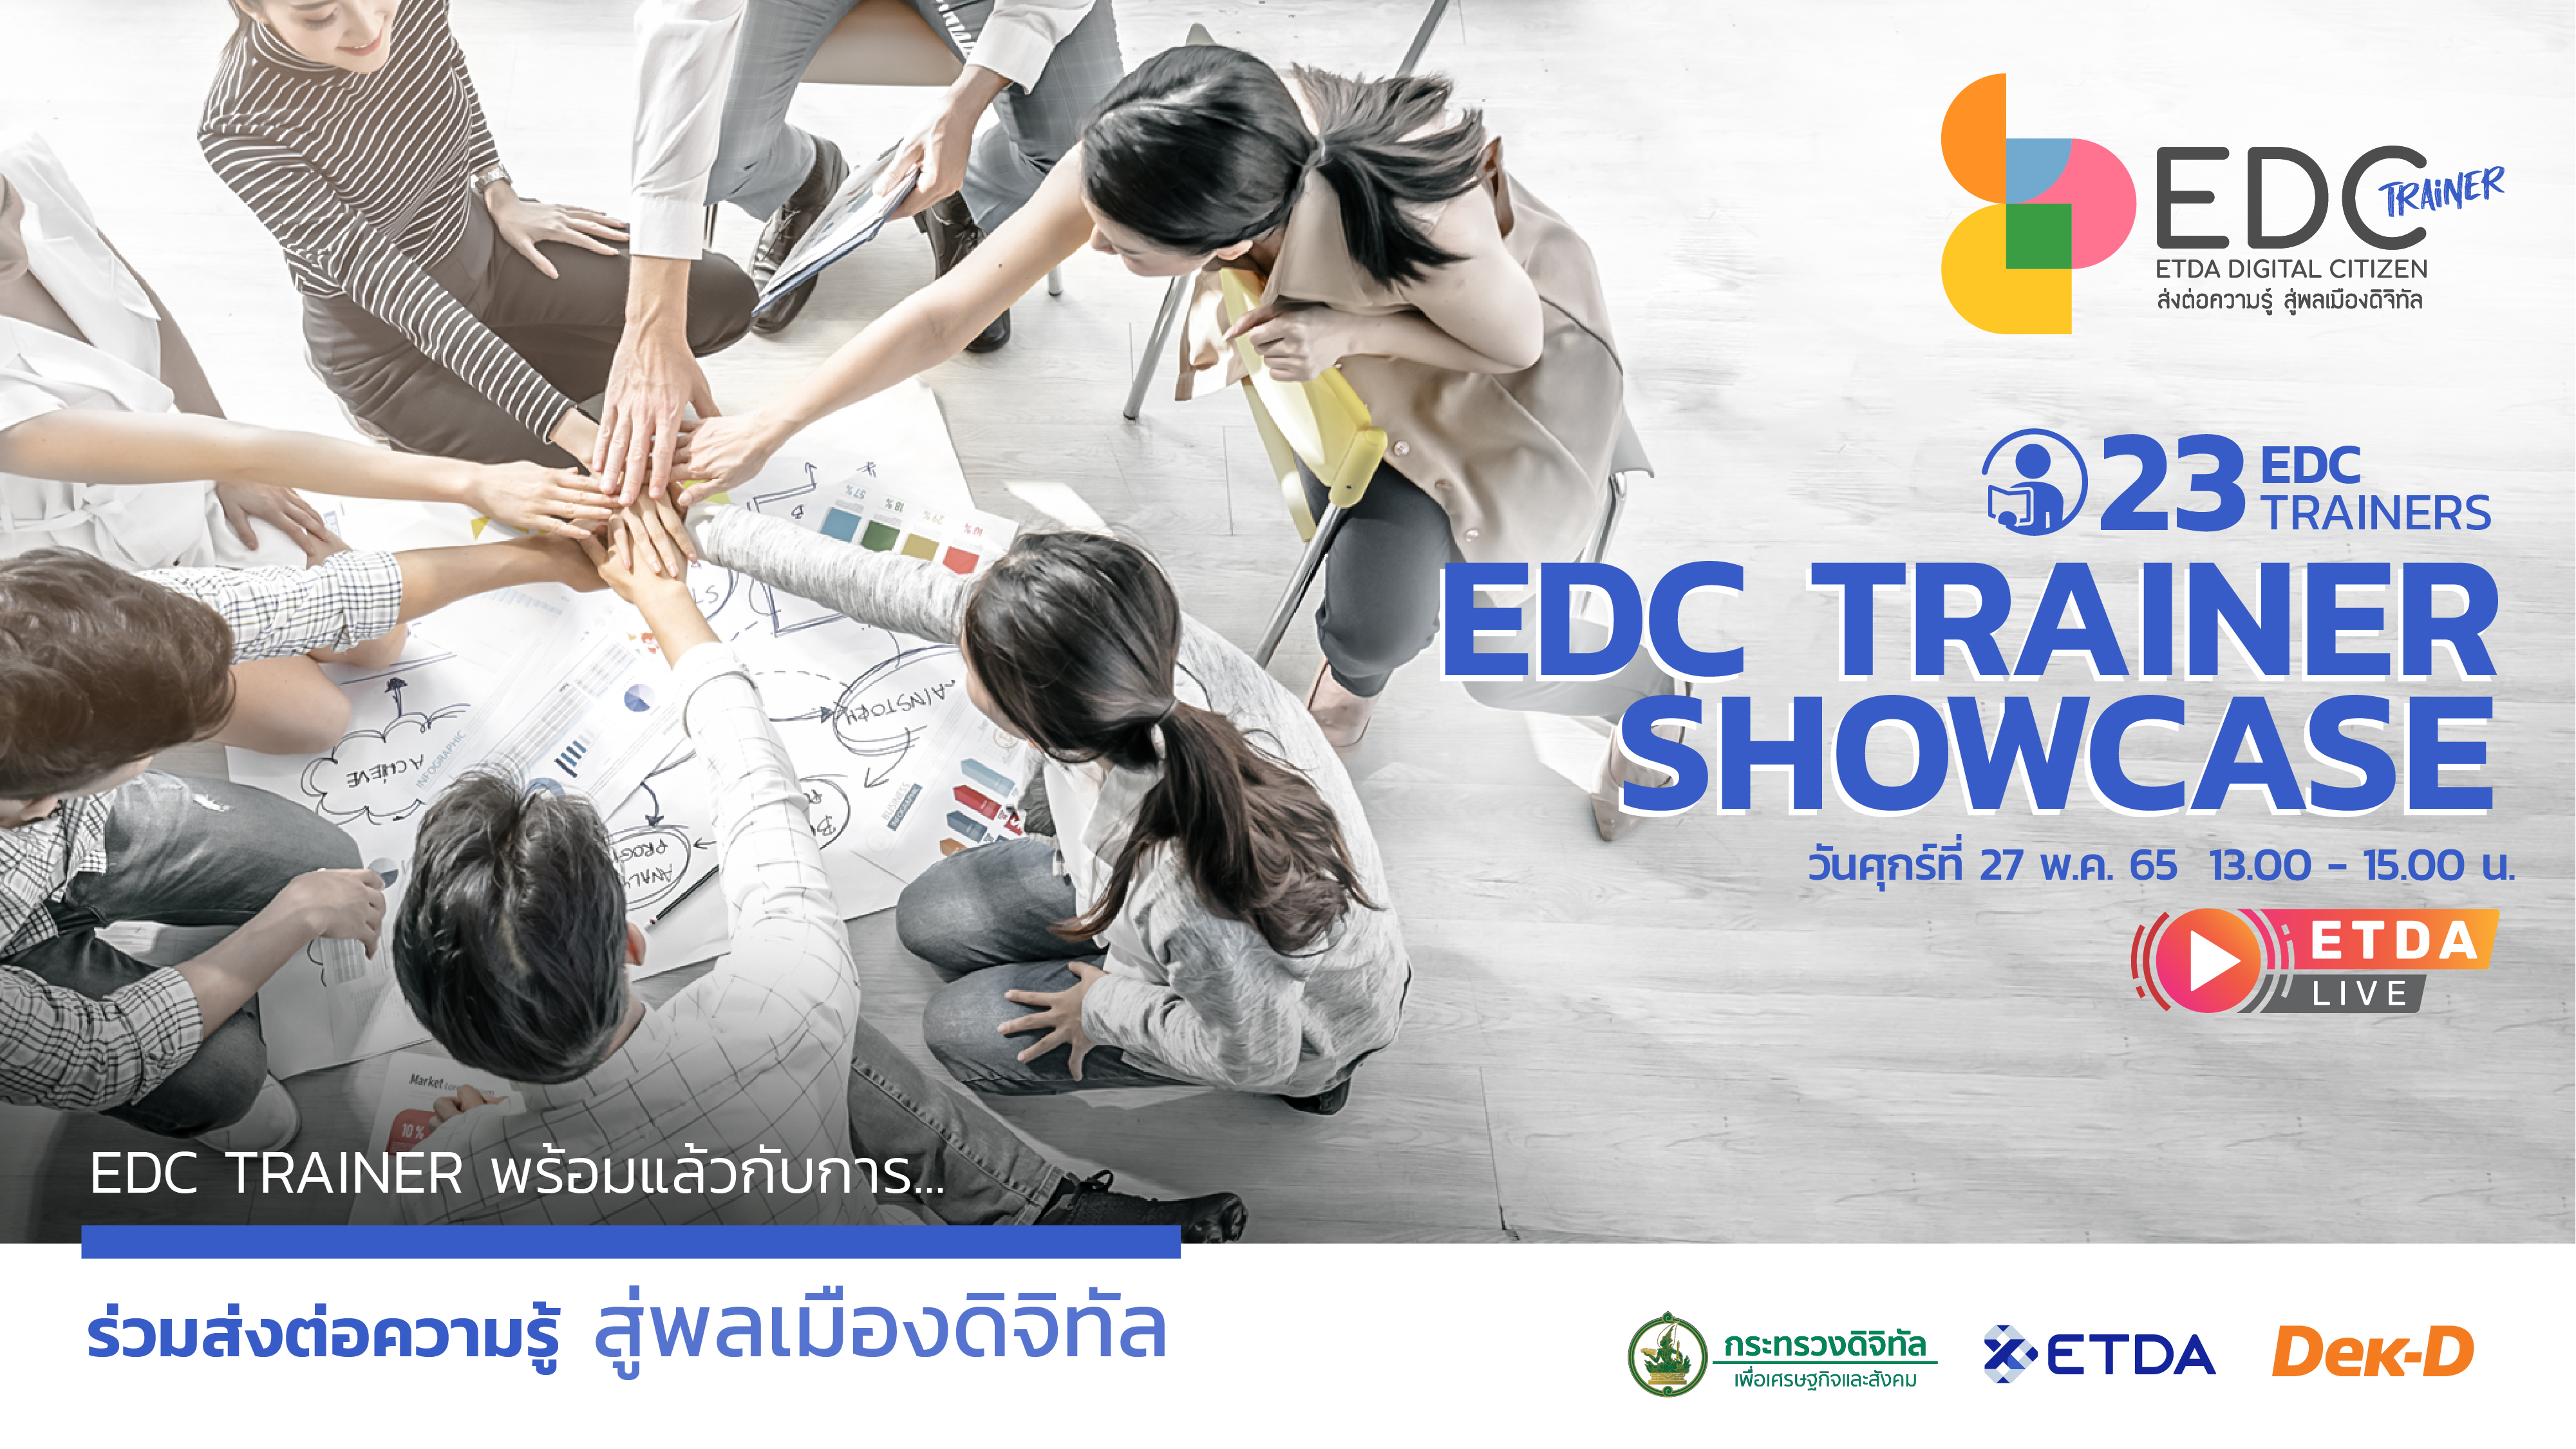 ETDA จัด EDC Trainer Showcase เปิดโฉม 23 EDC Trainers รุ่นแรก  ก่อนลุยขยายเครือข่าย สร้างพลเมืองดิจิ